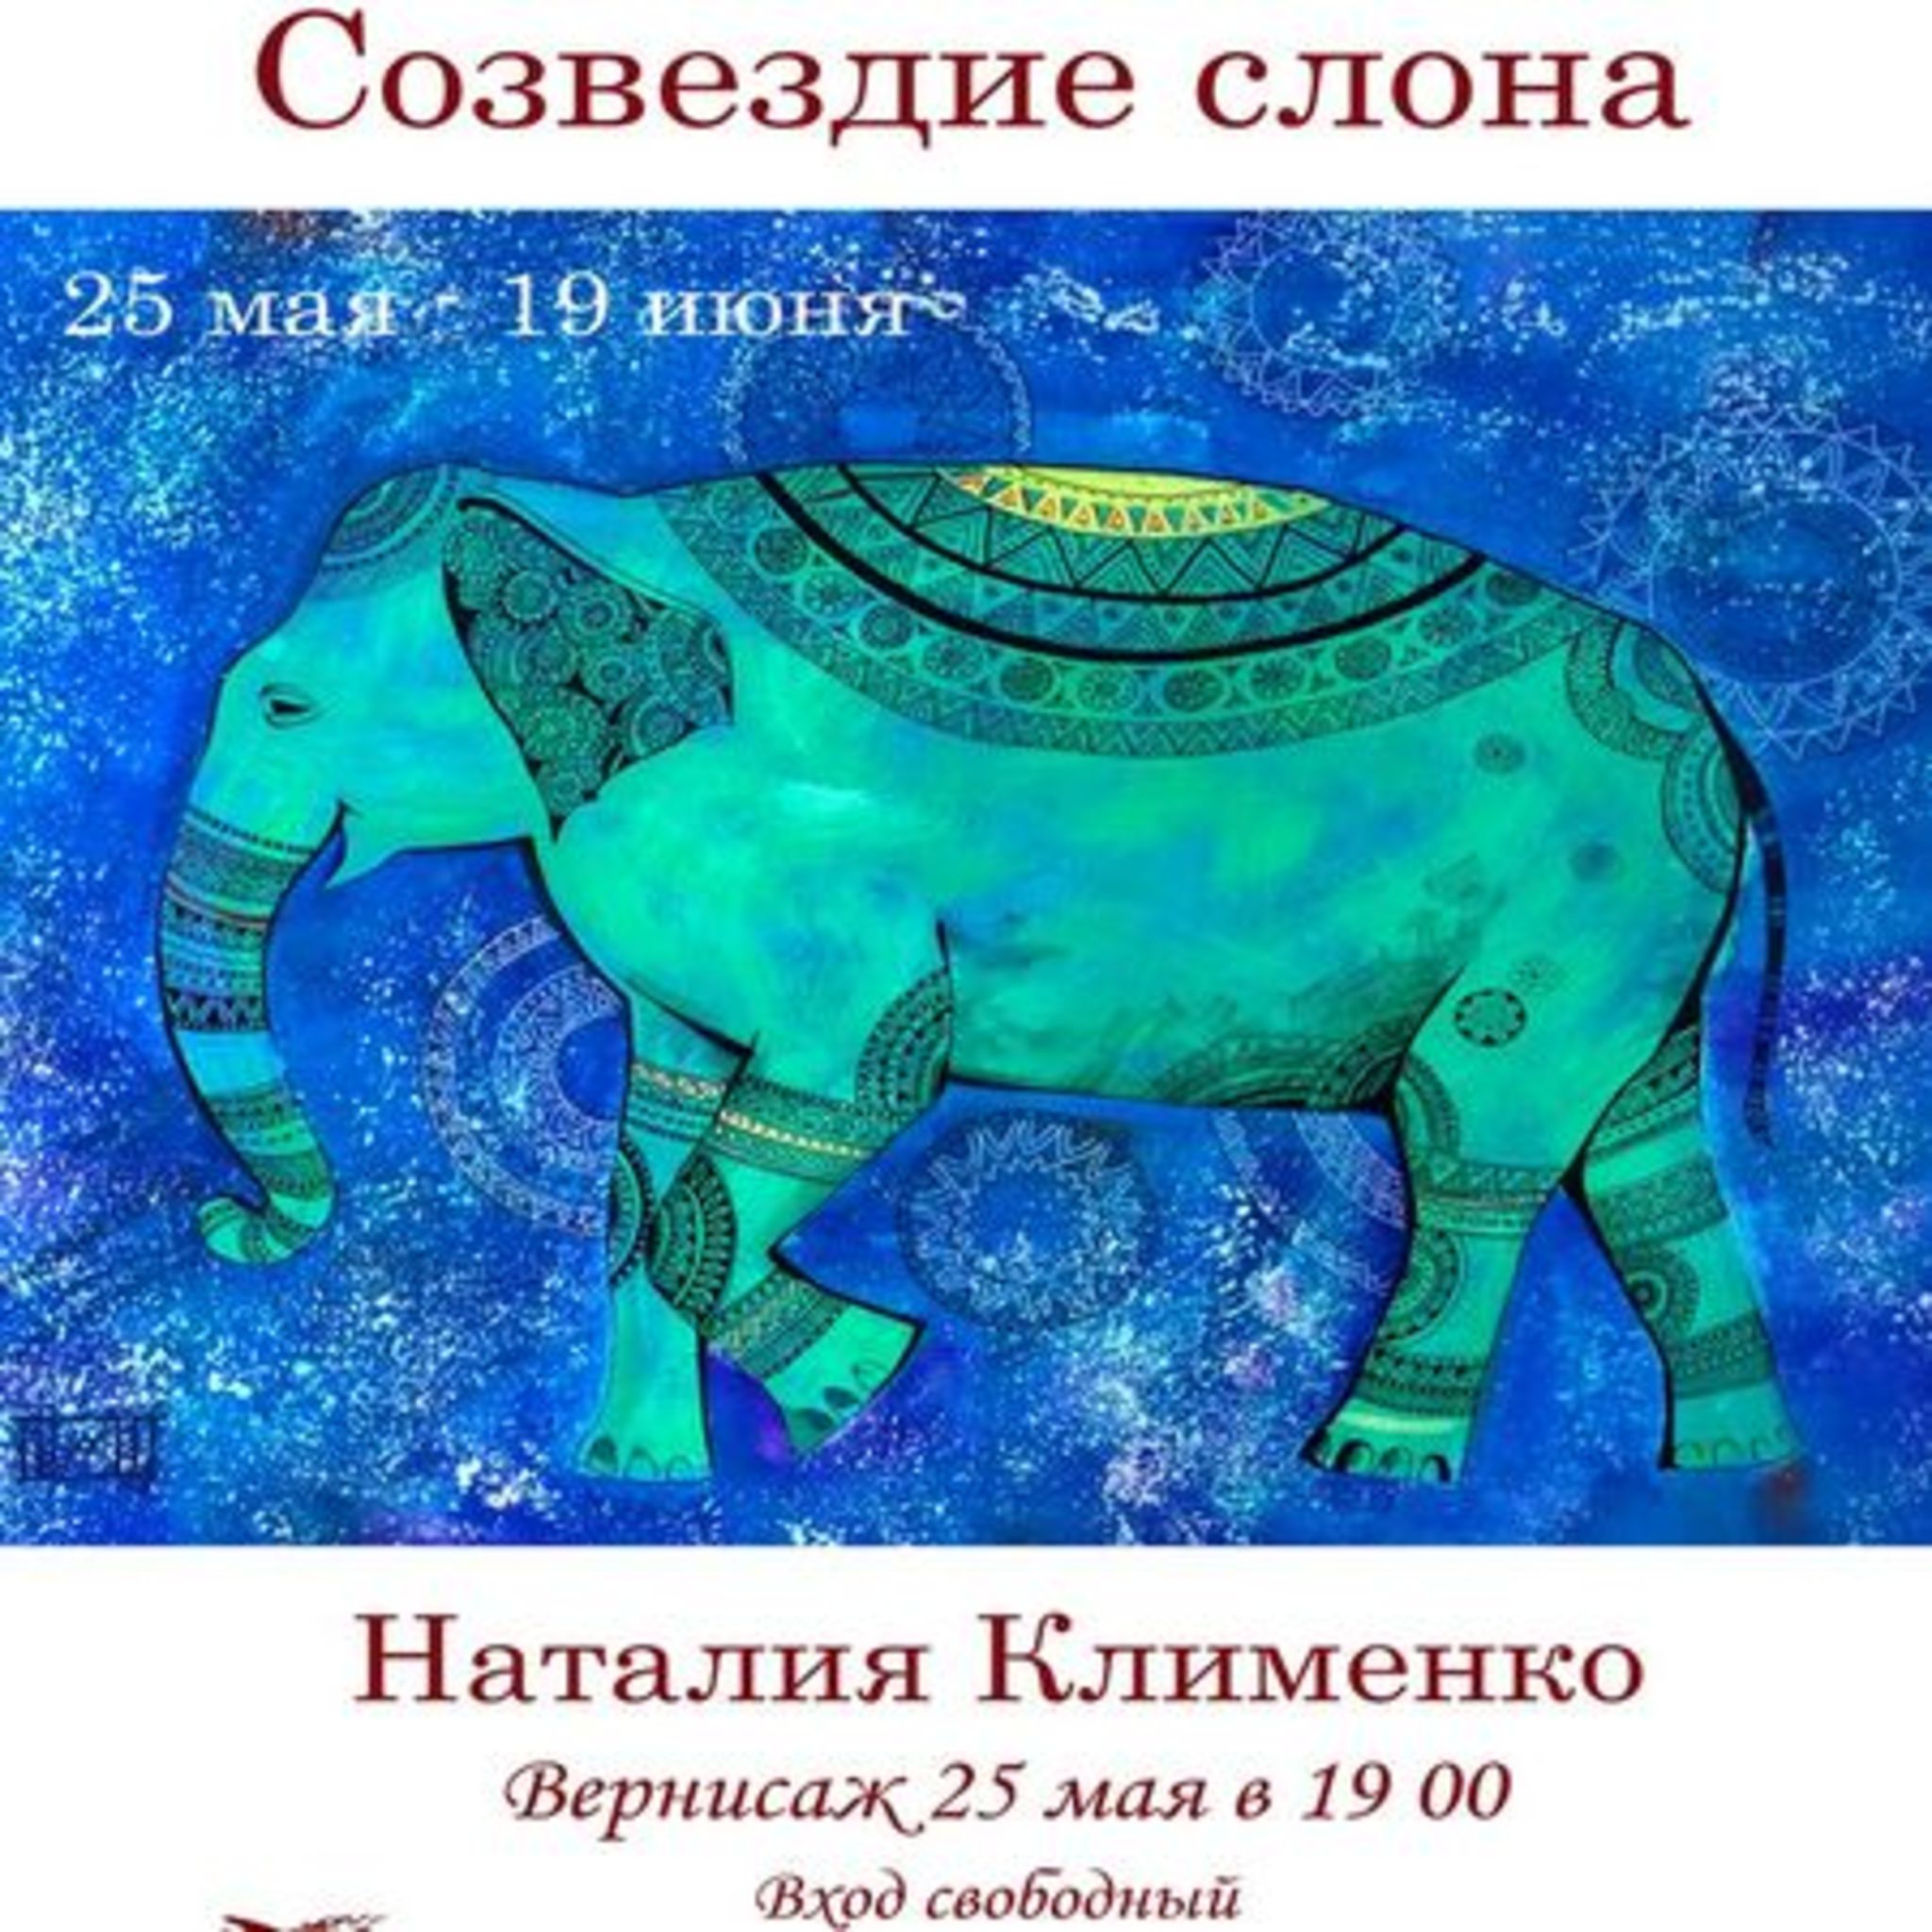 The exhibition Natalia Klimenko Constellation elephant